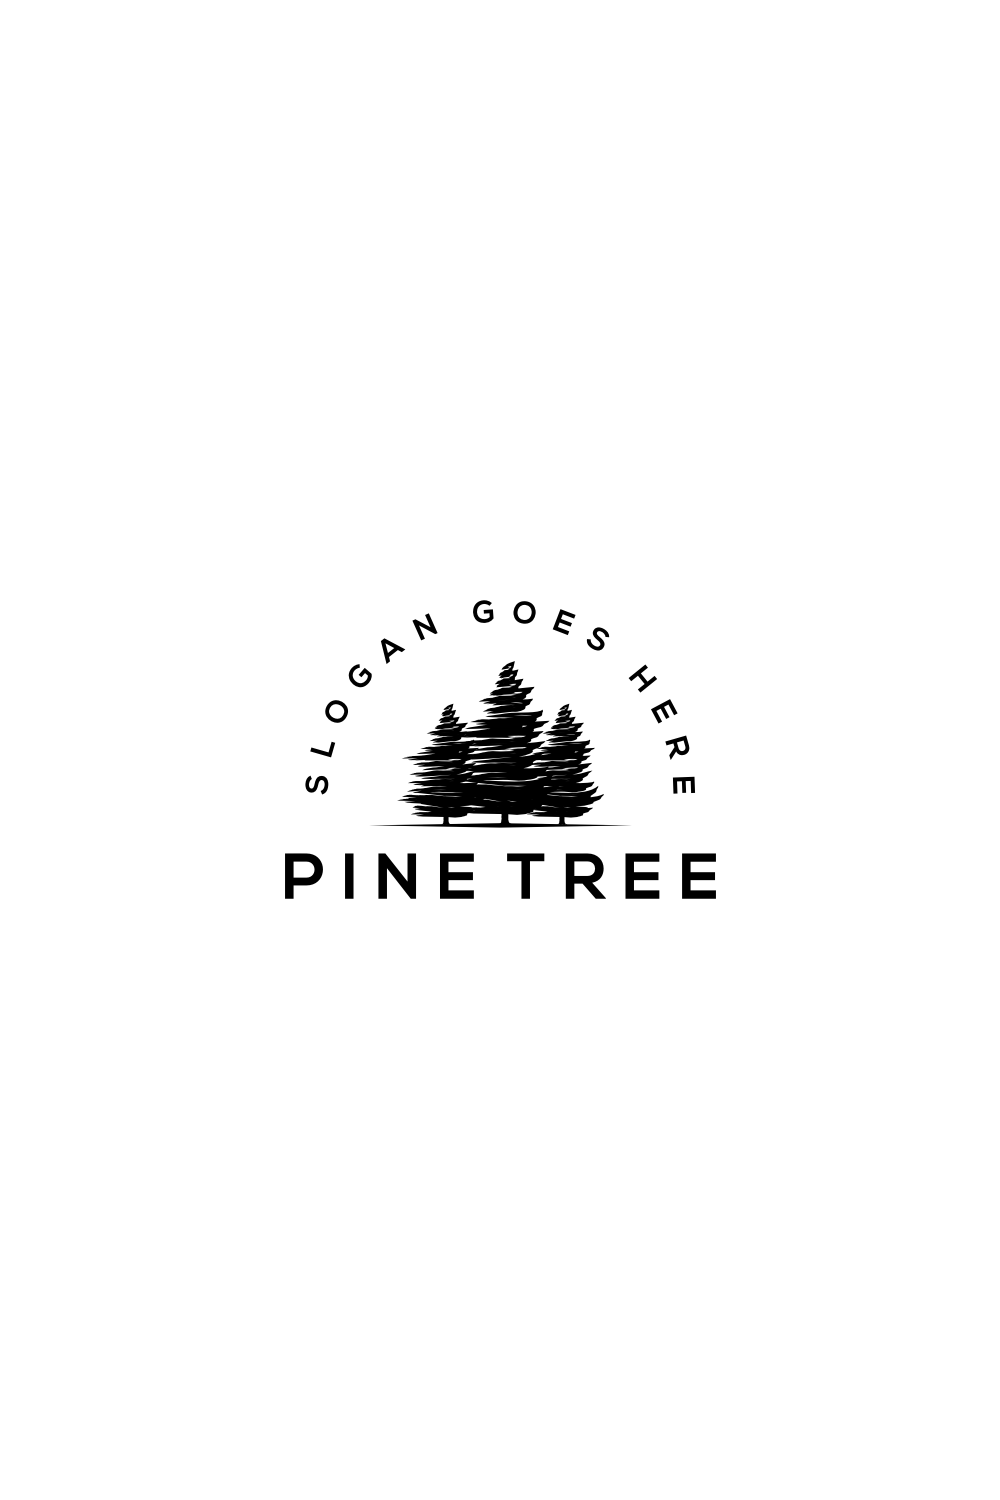 Pine Tree Logo Vector Design Template pinterest image.